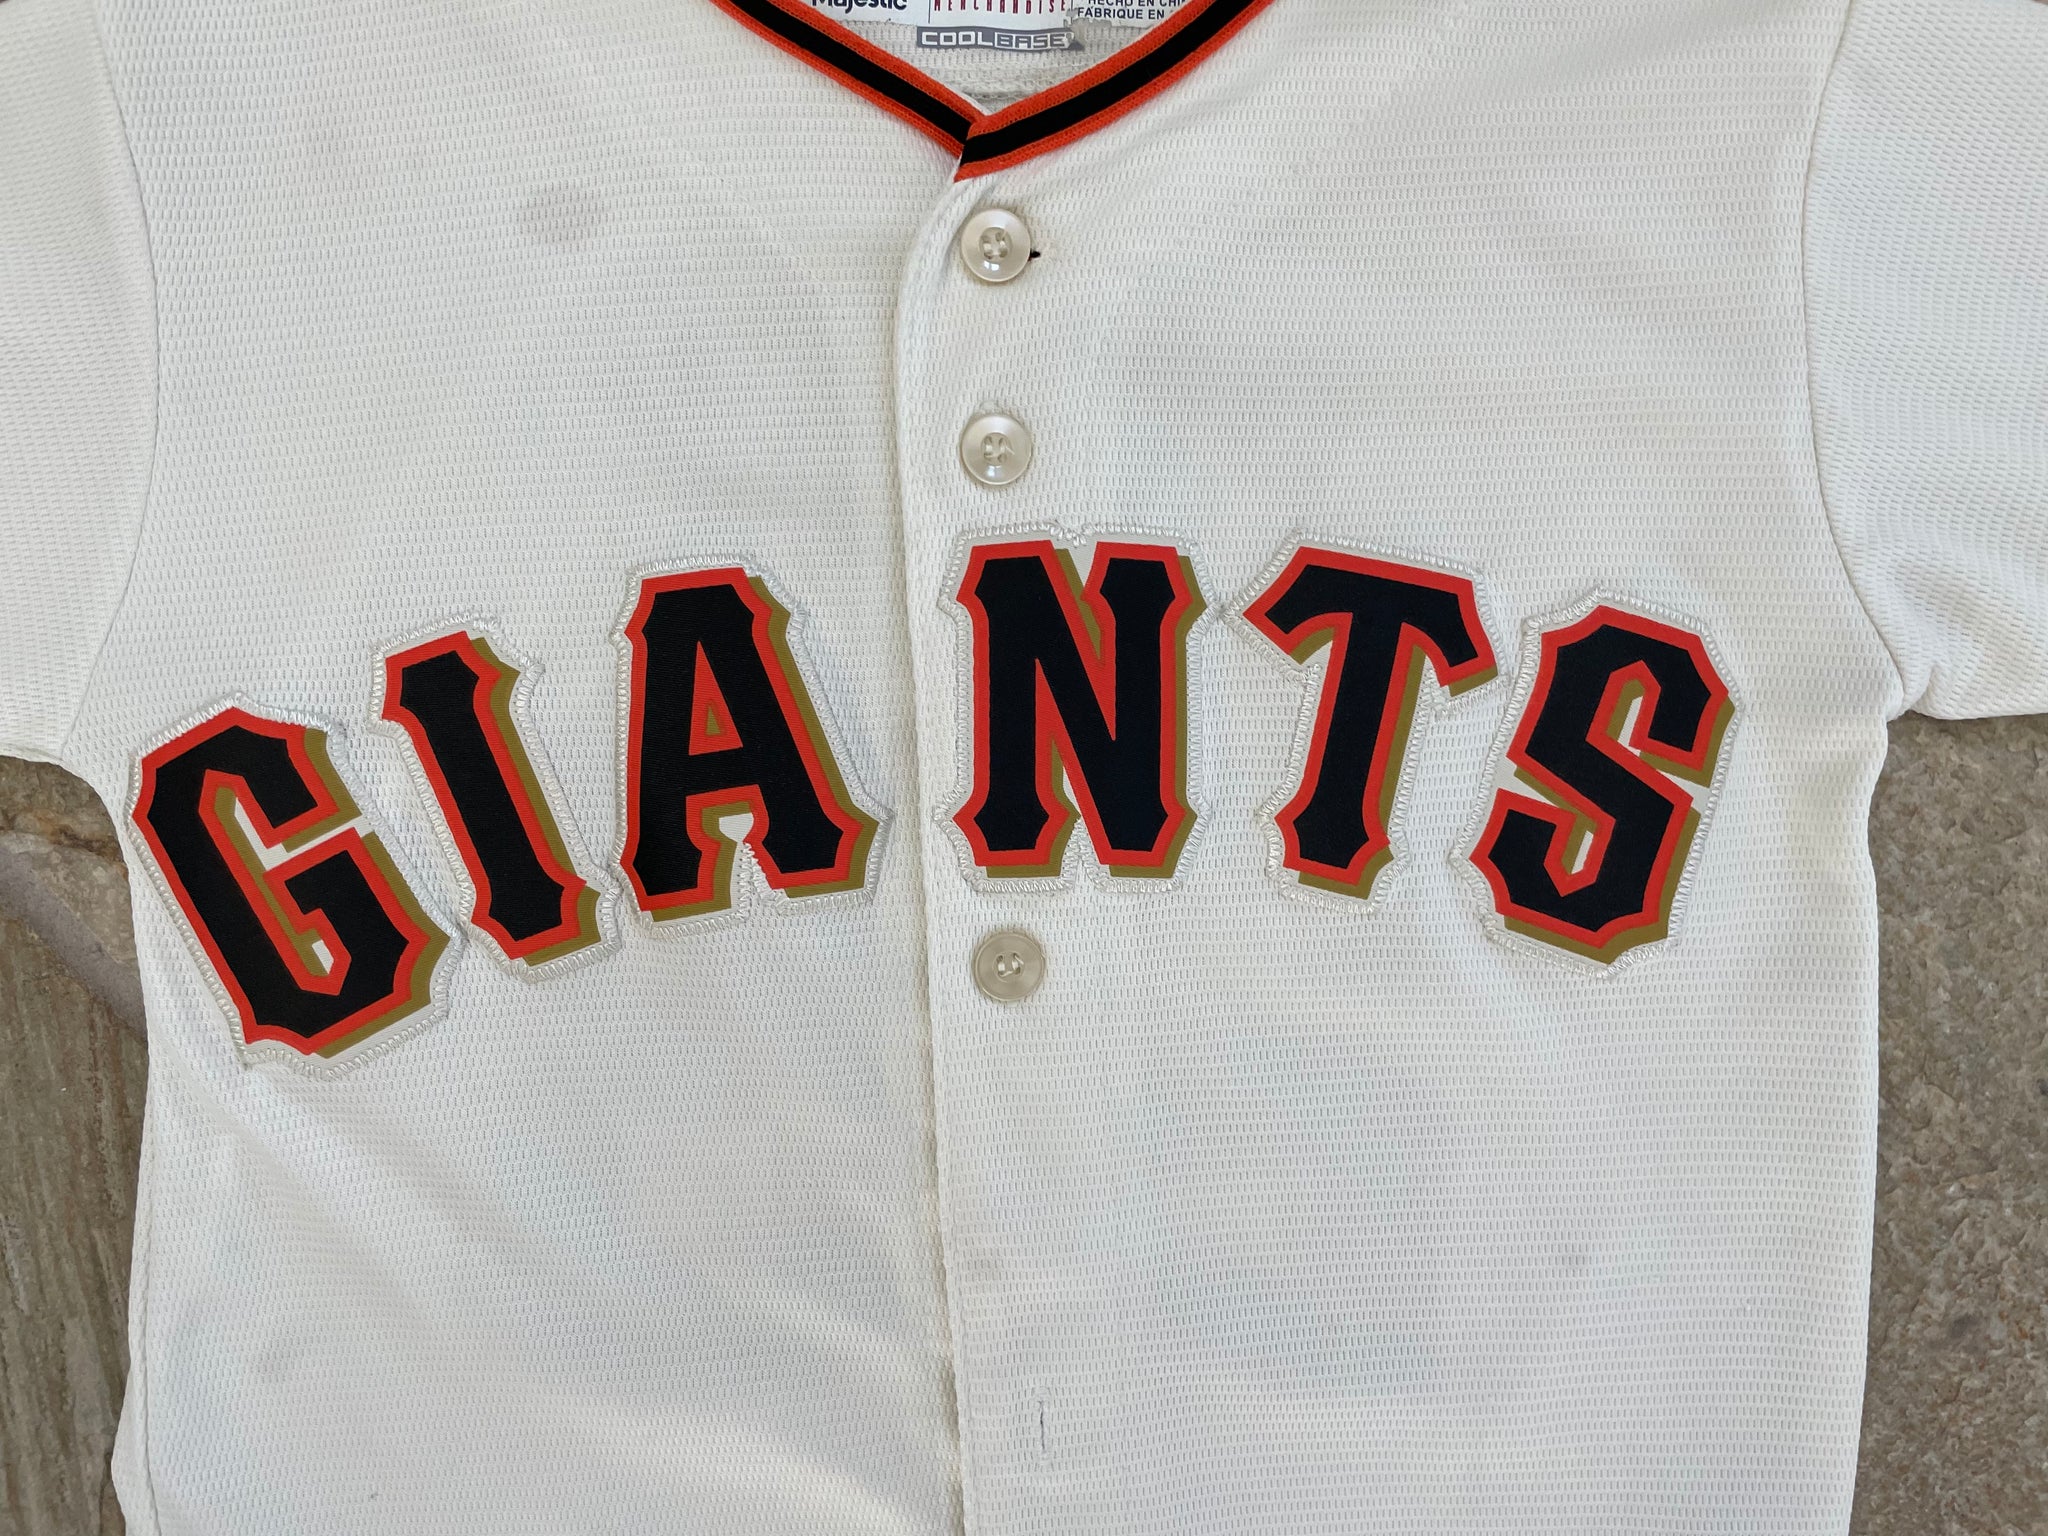 San Francisco Giants Buster Posey Majestic Baseball Jersey, Size